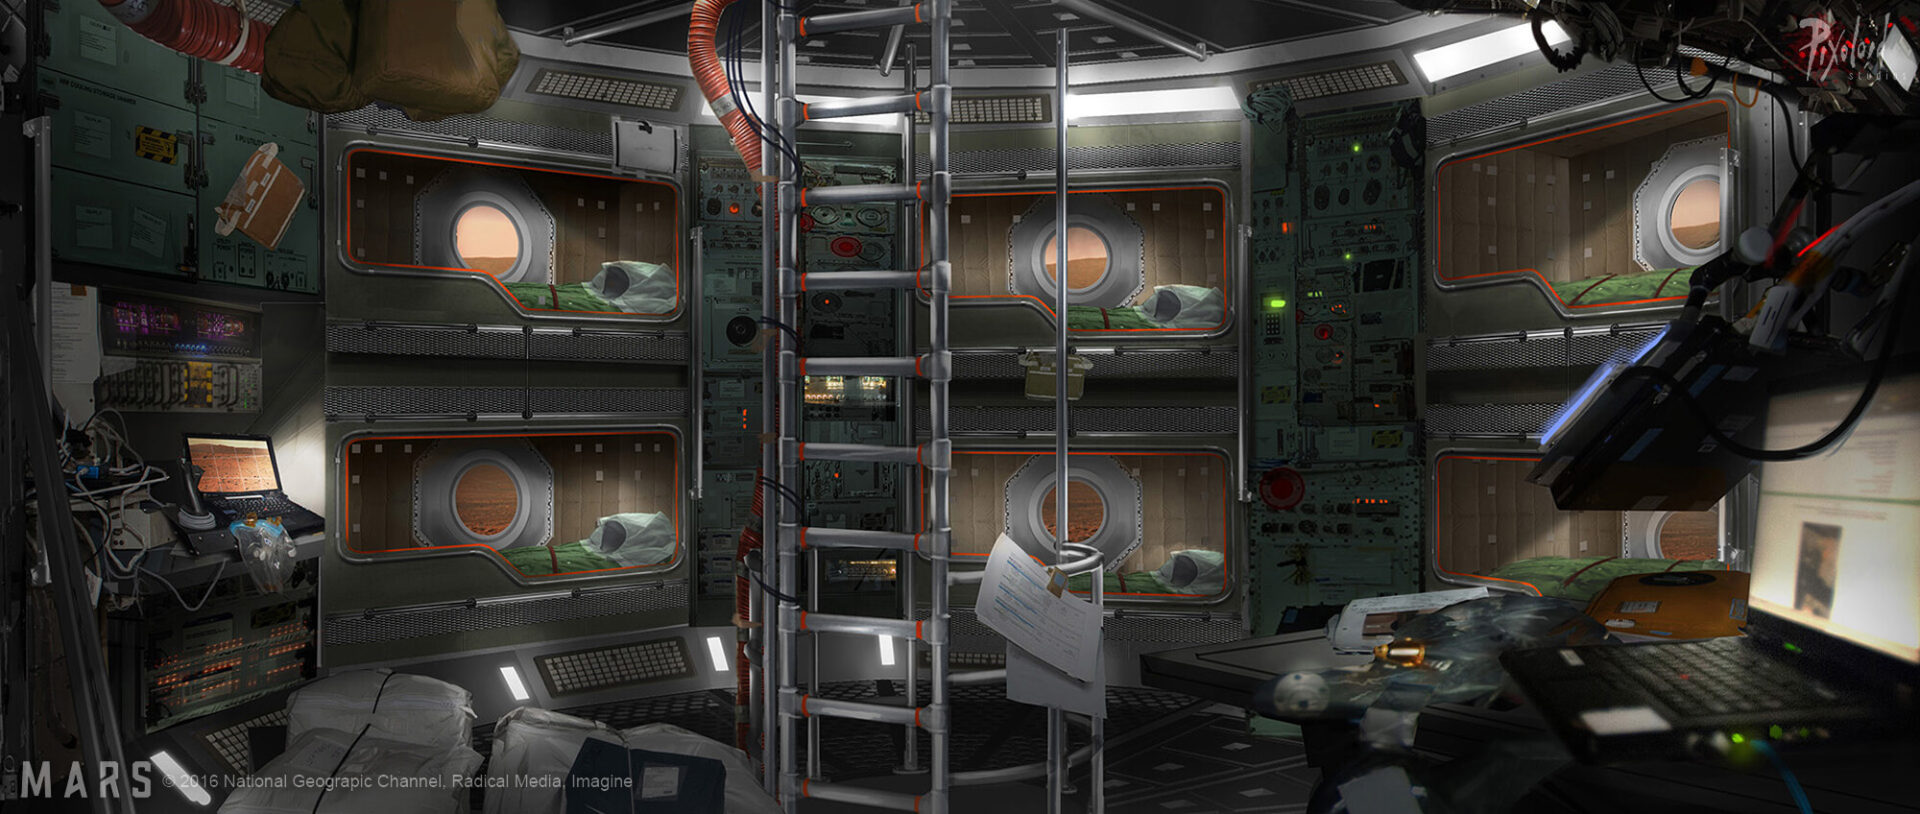 Mars set design - astronaut cabin